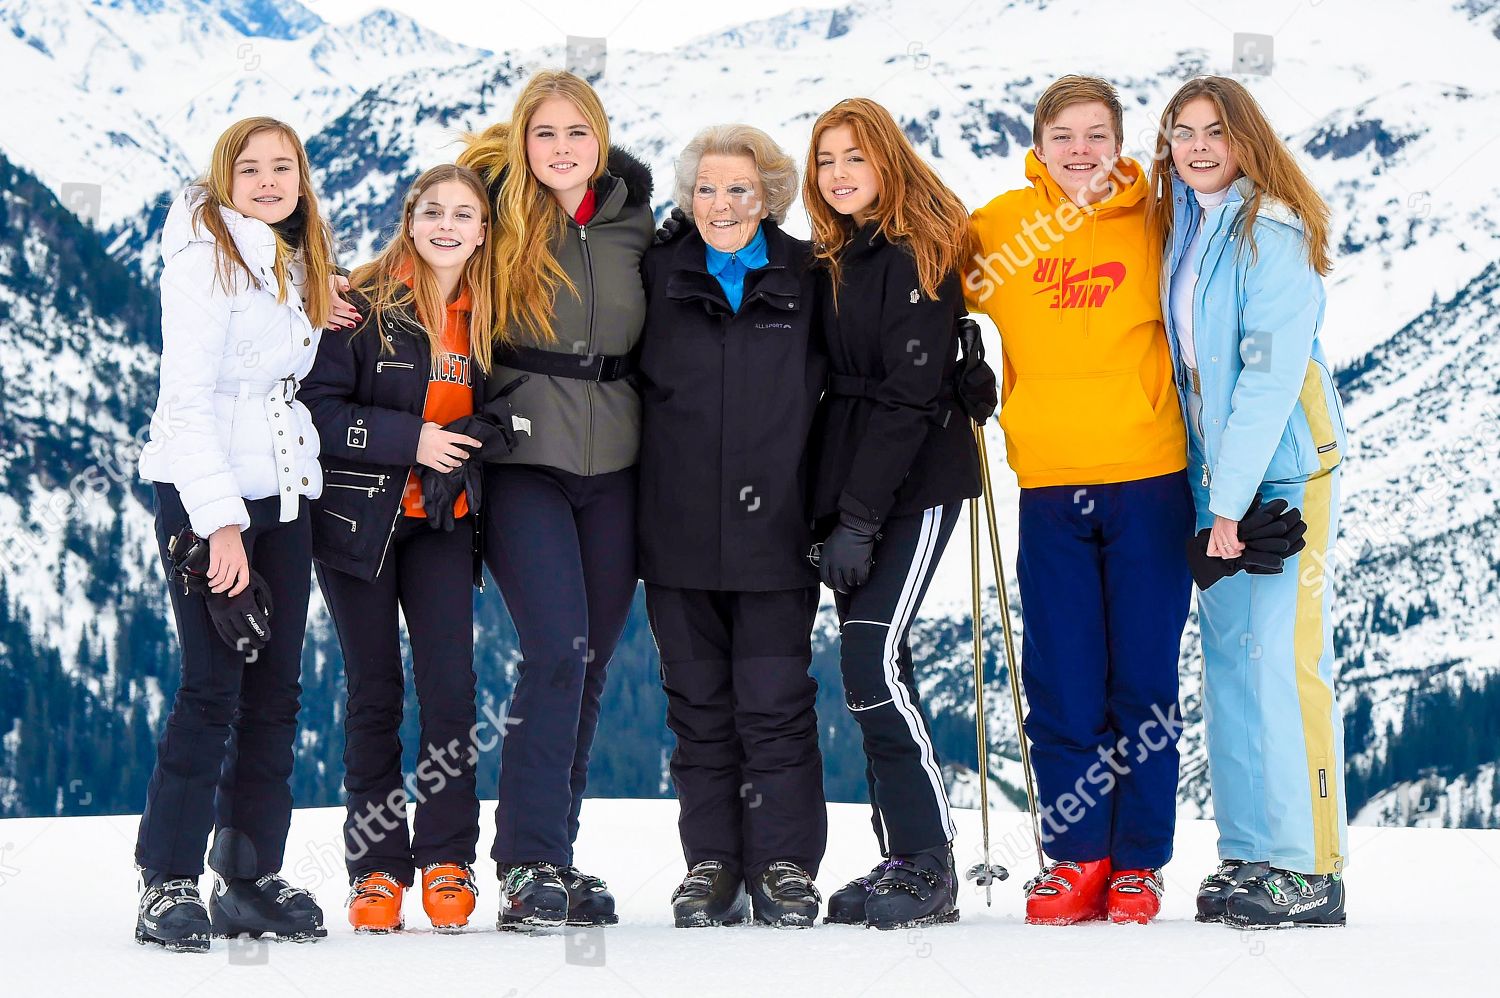 dutch-royal-family-winter-holiday-photocall-lech-austria-shutterstock-editorial-10566567o.jpg